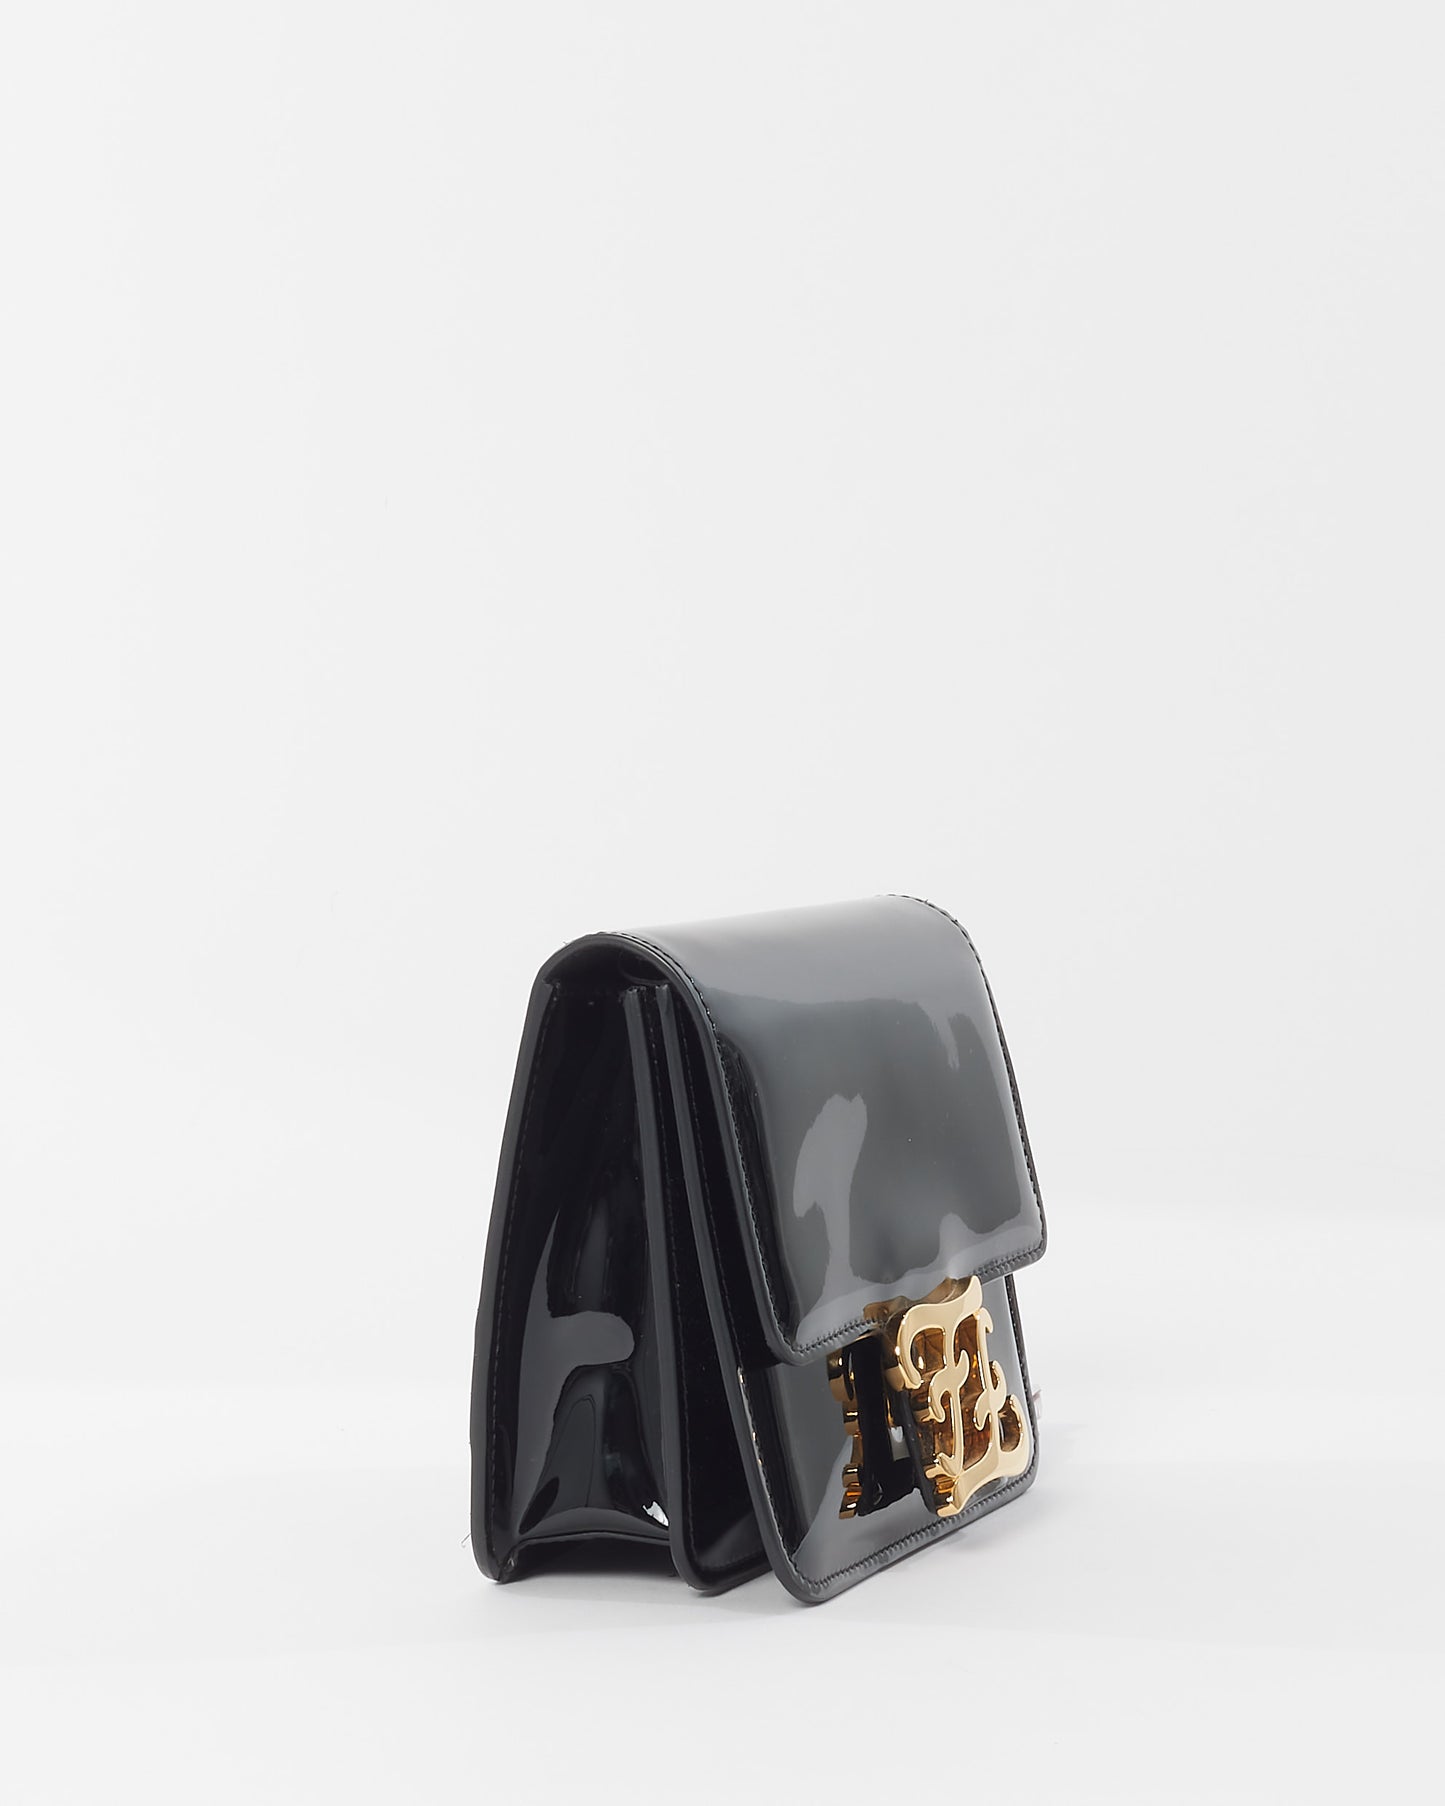 Fendi Black Patent Leather Karligraphy Small Crossbody Bag